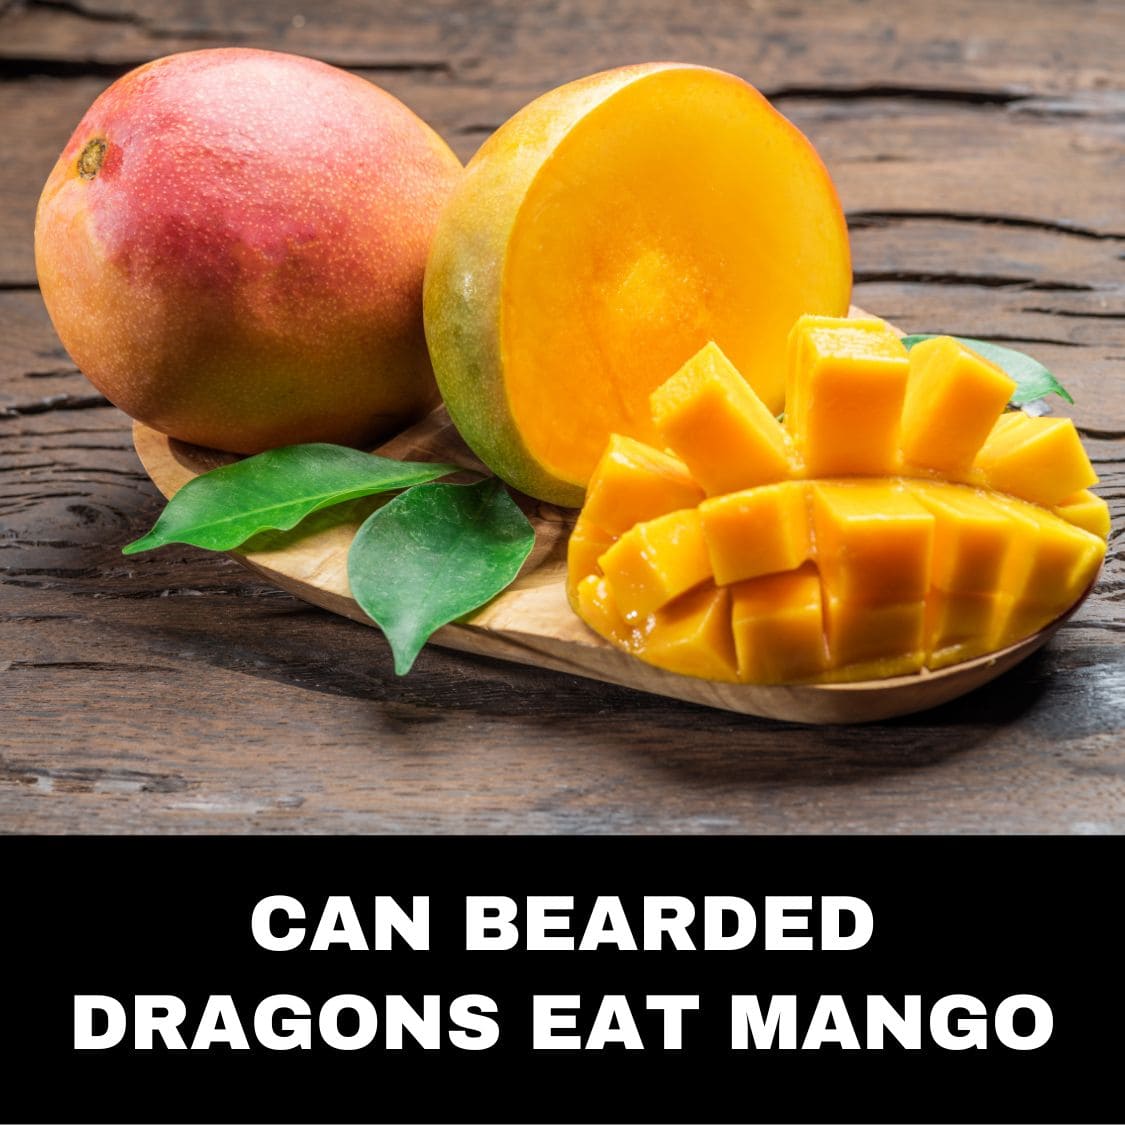 Can bearded dragons eat mango